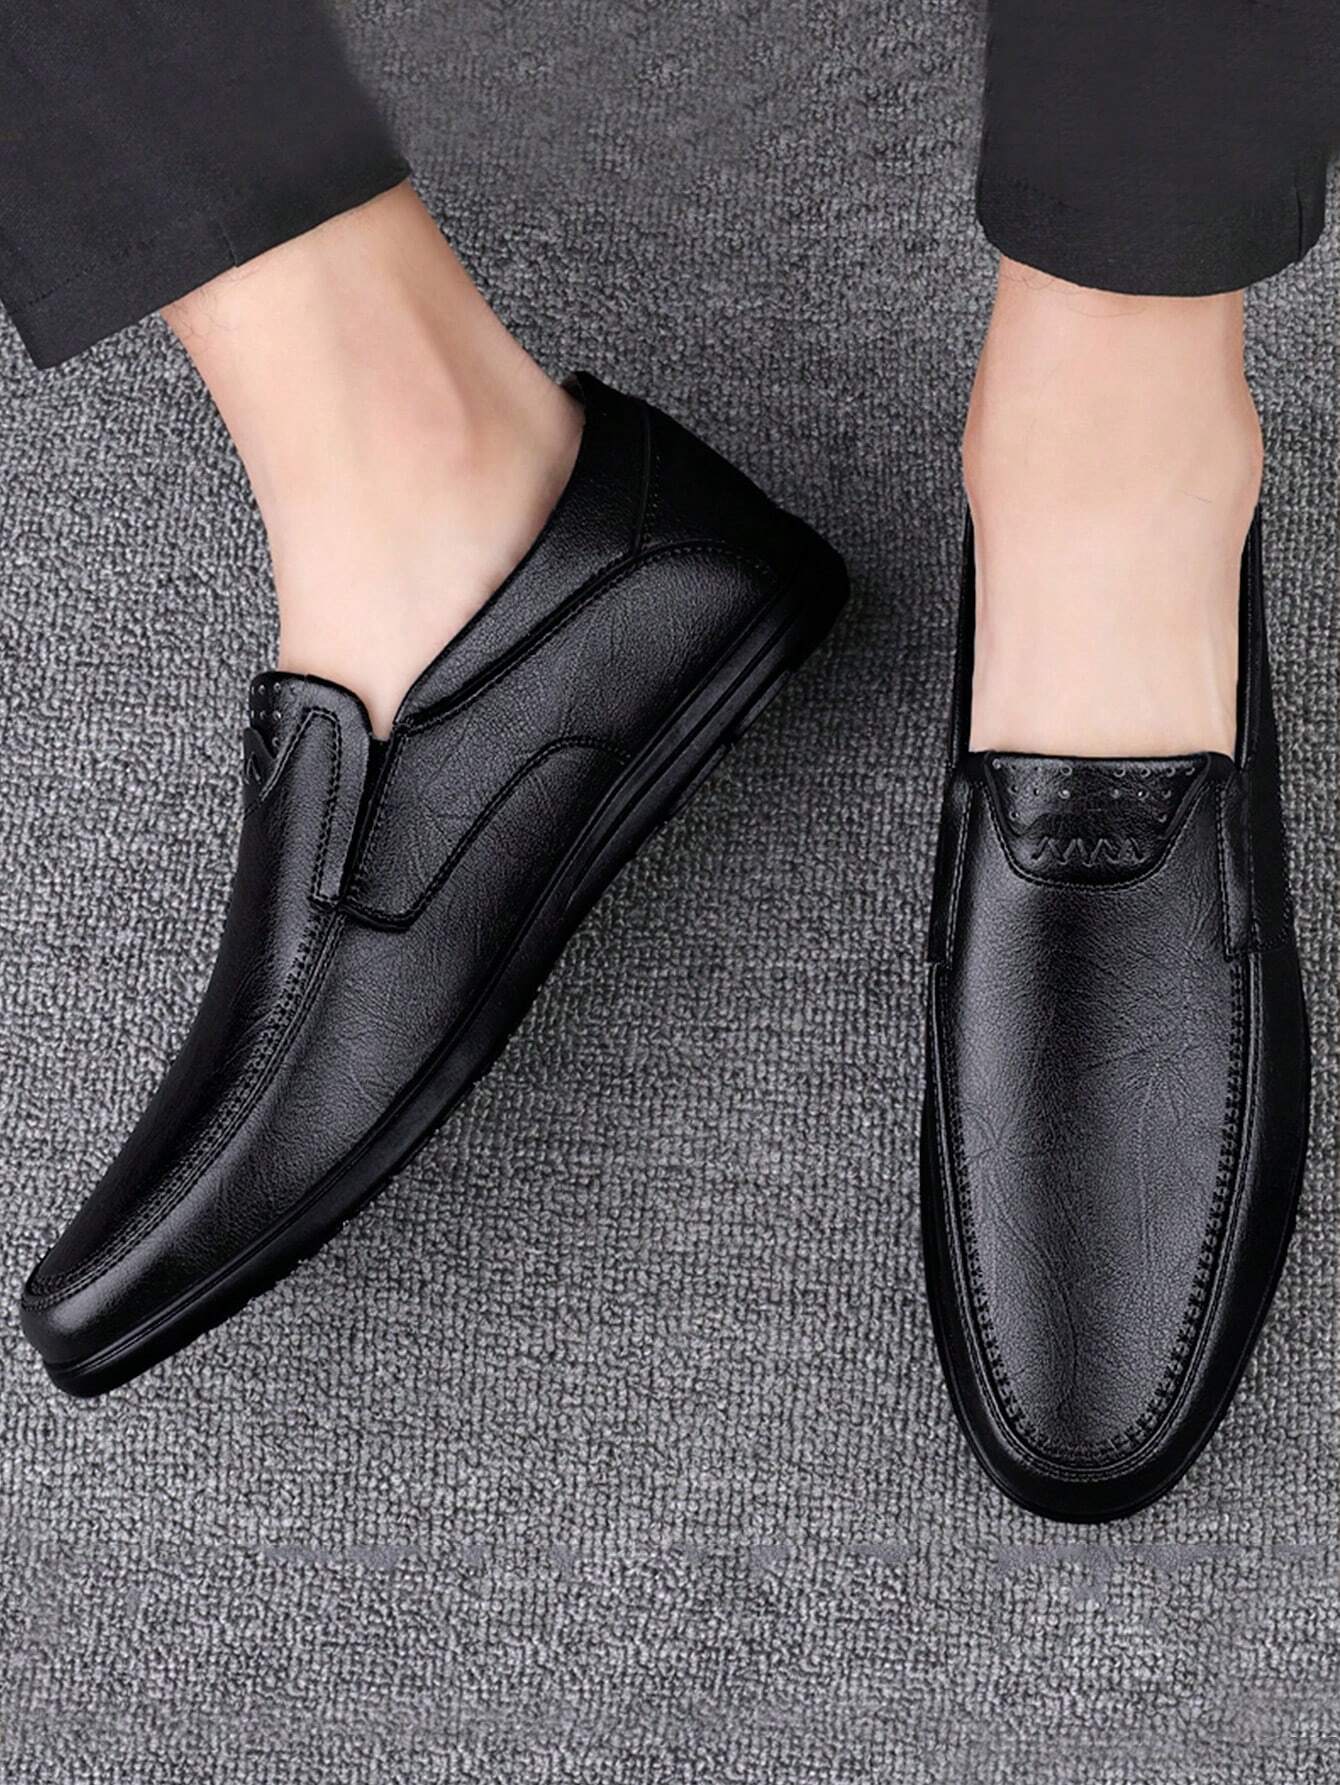 Men Minimalist Slip On Loafers, Leisure Black Casual Loafers